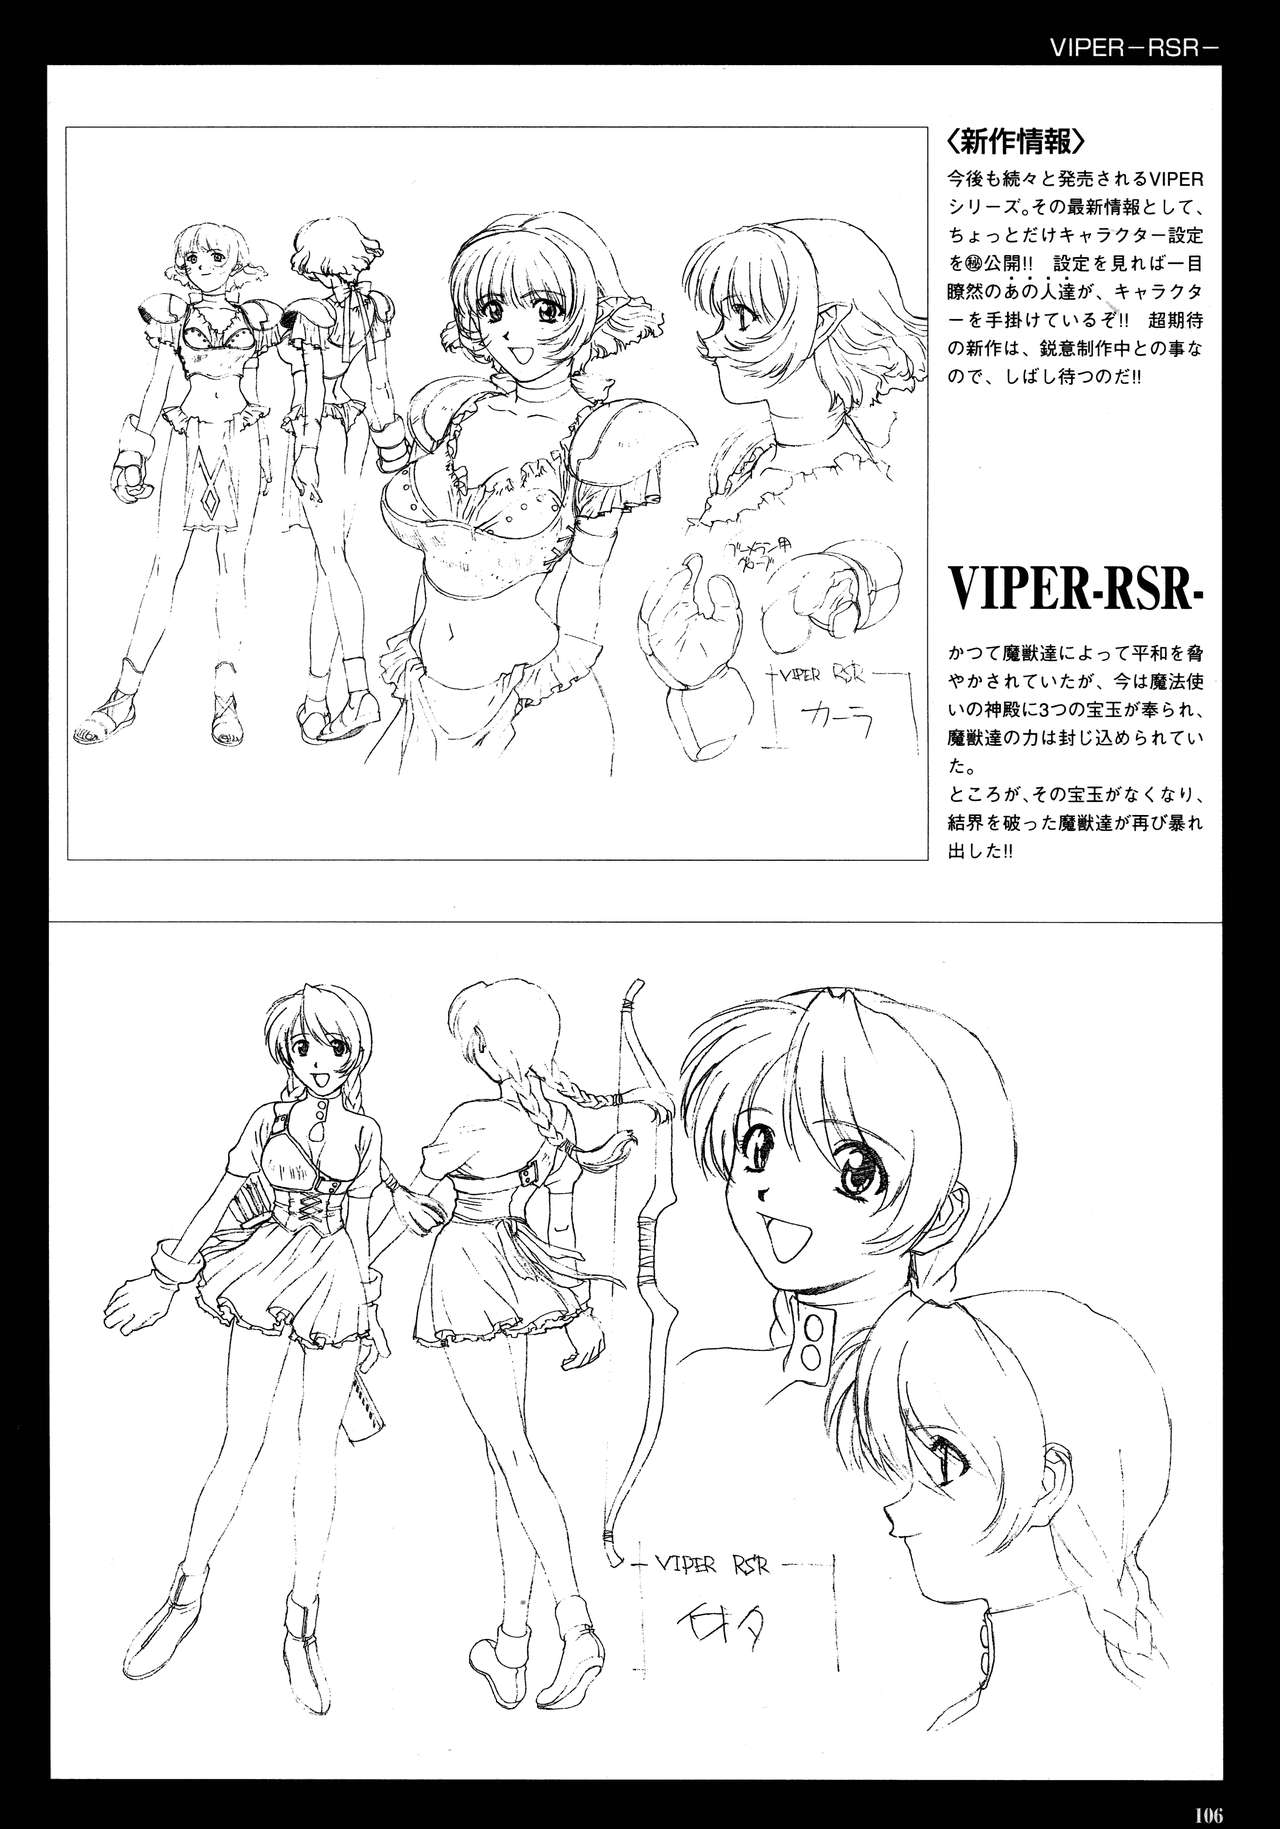 VIPER Series イラスト原画集 IV